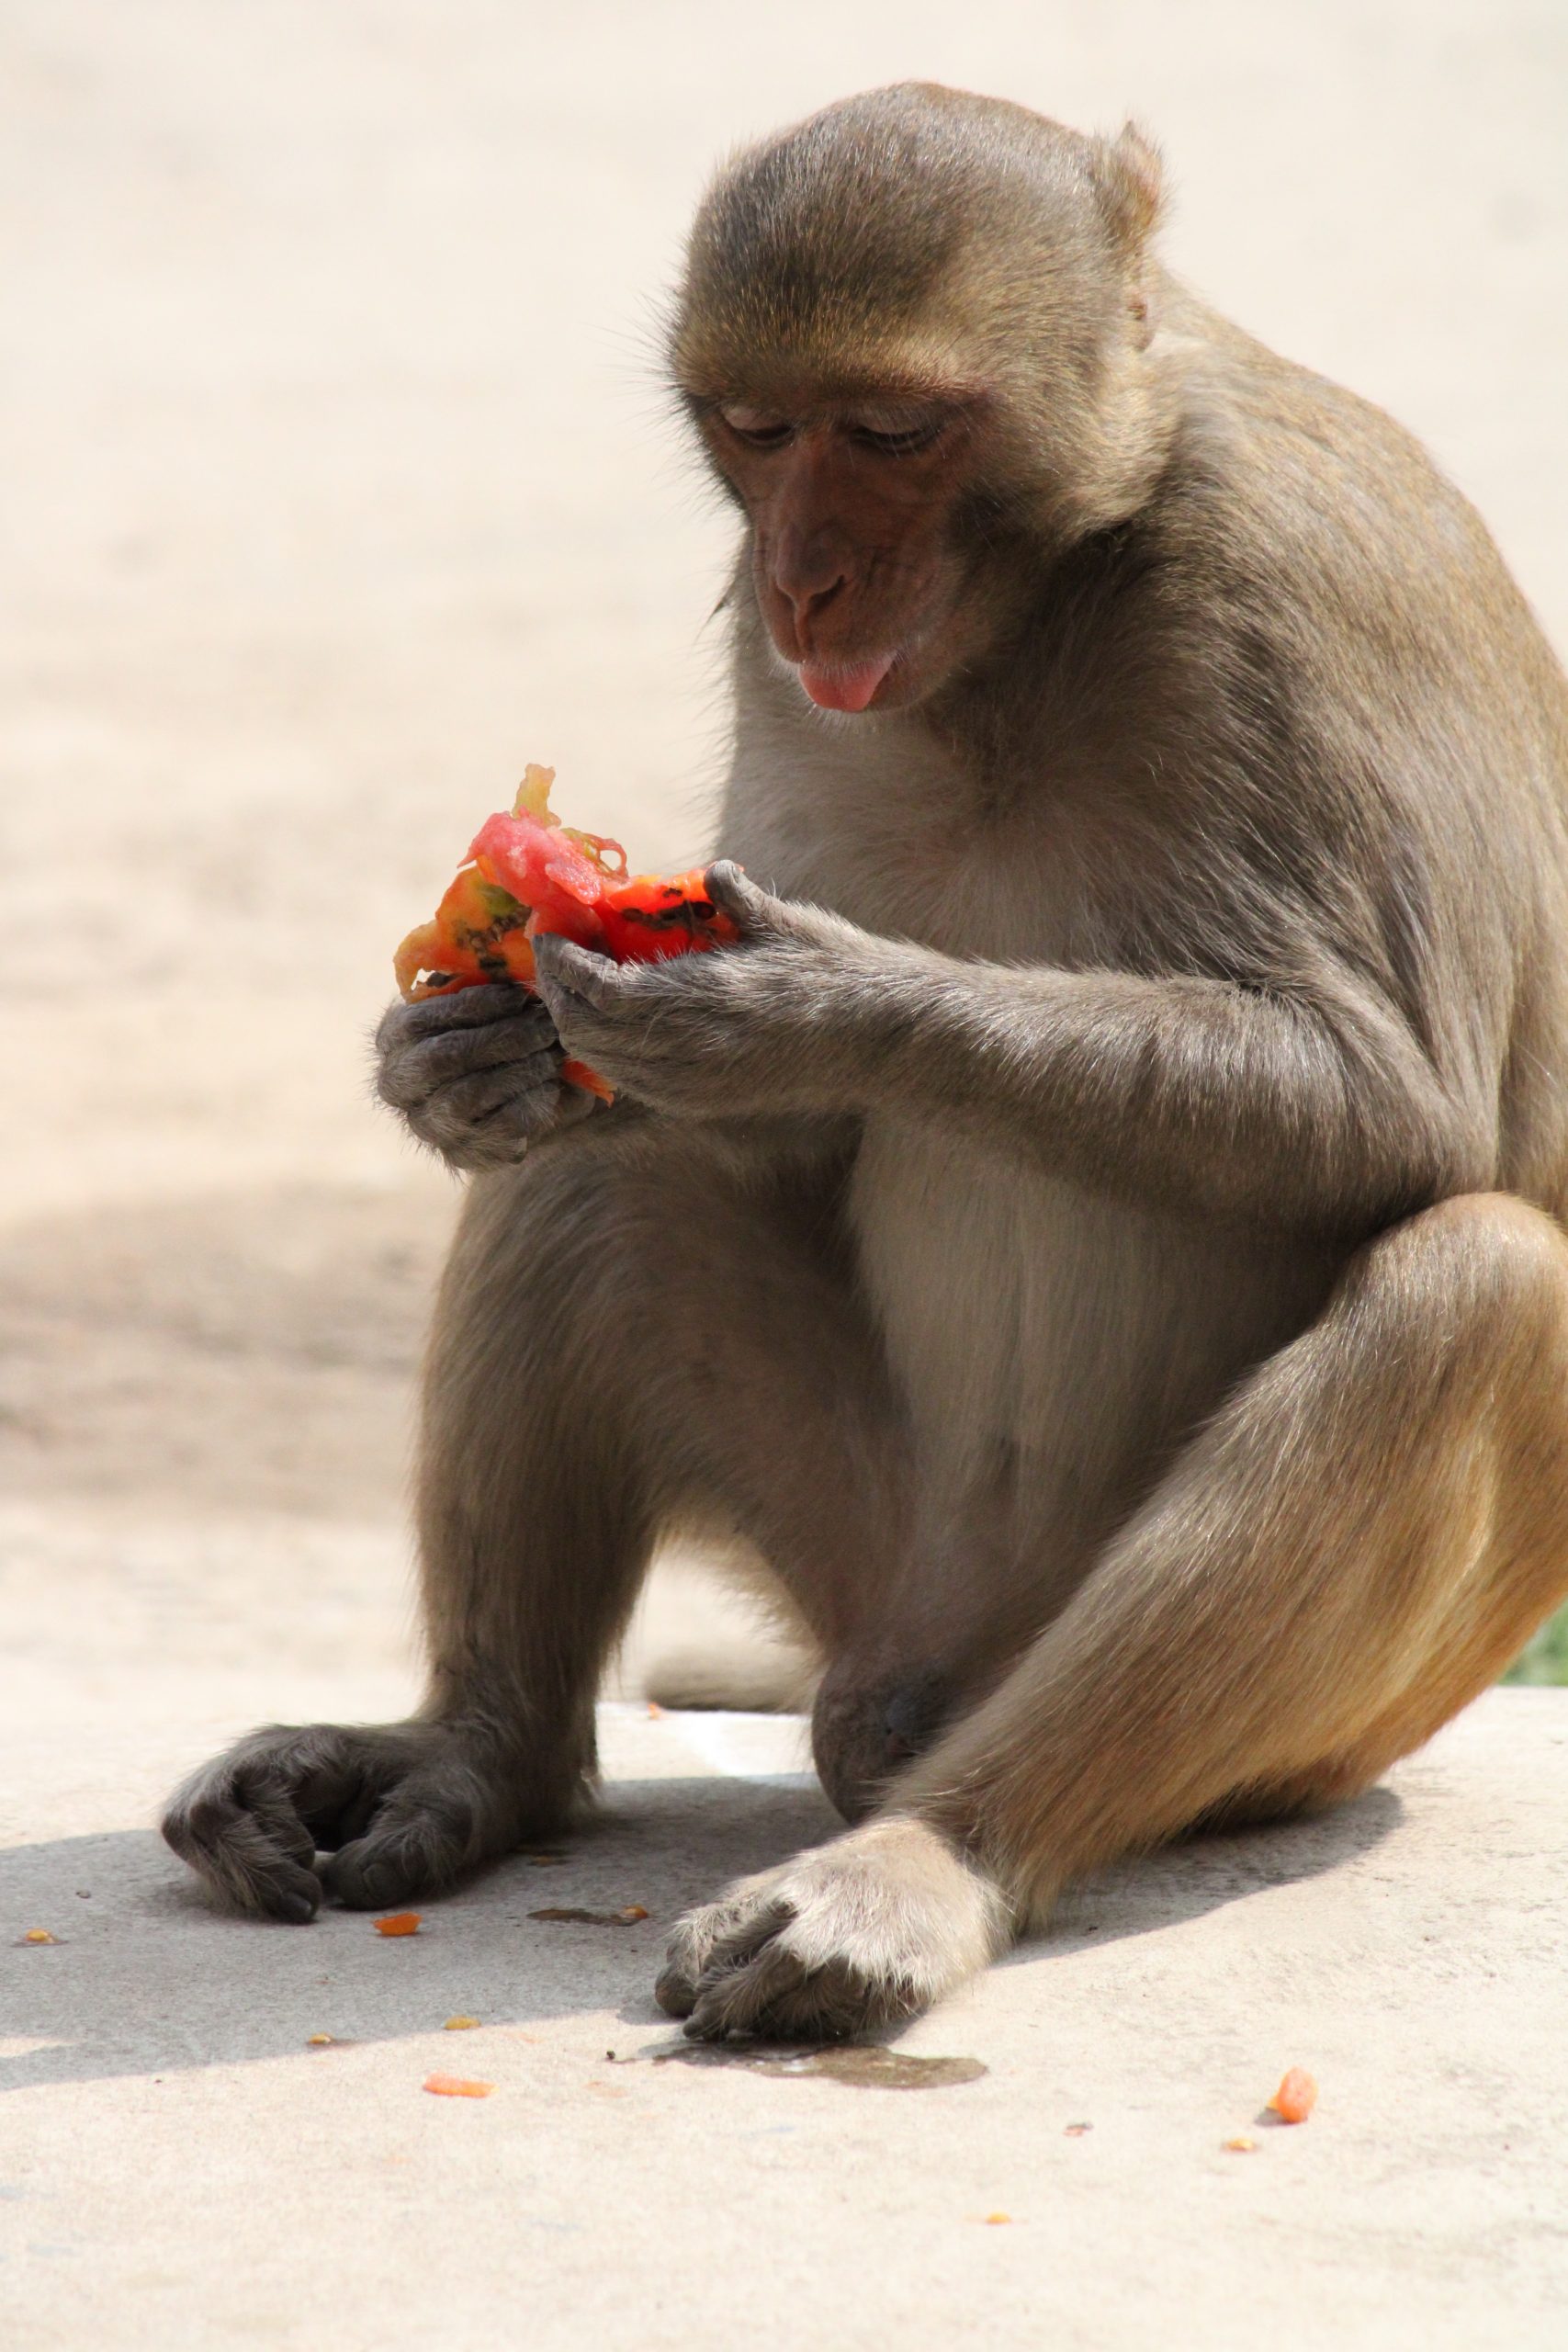 Monkey eating tomato